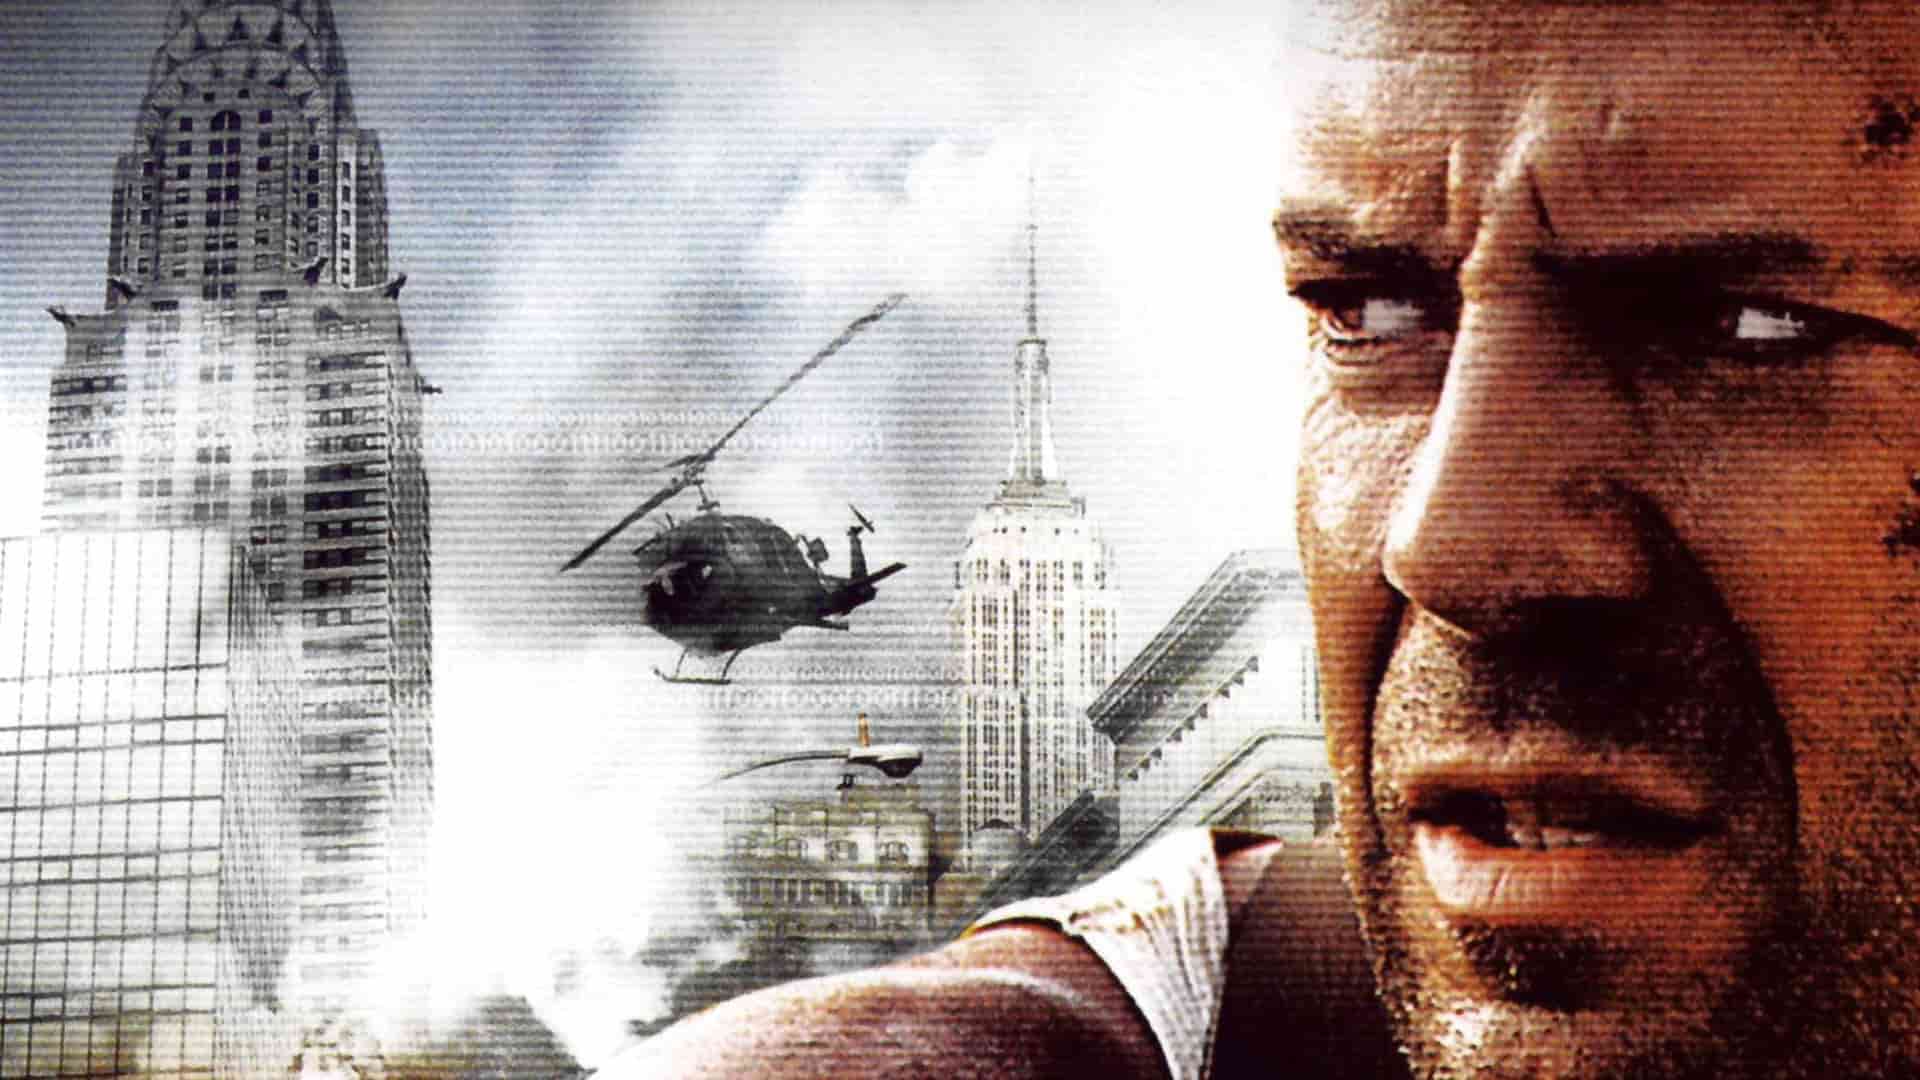 دانلود فیلم Die Hard with a Vengeance 1995